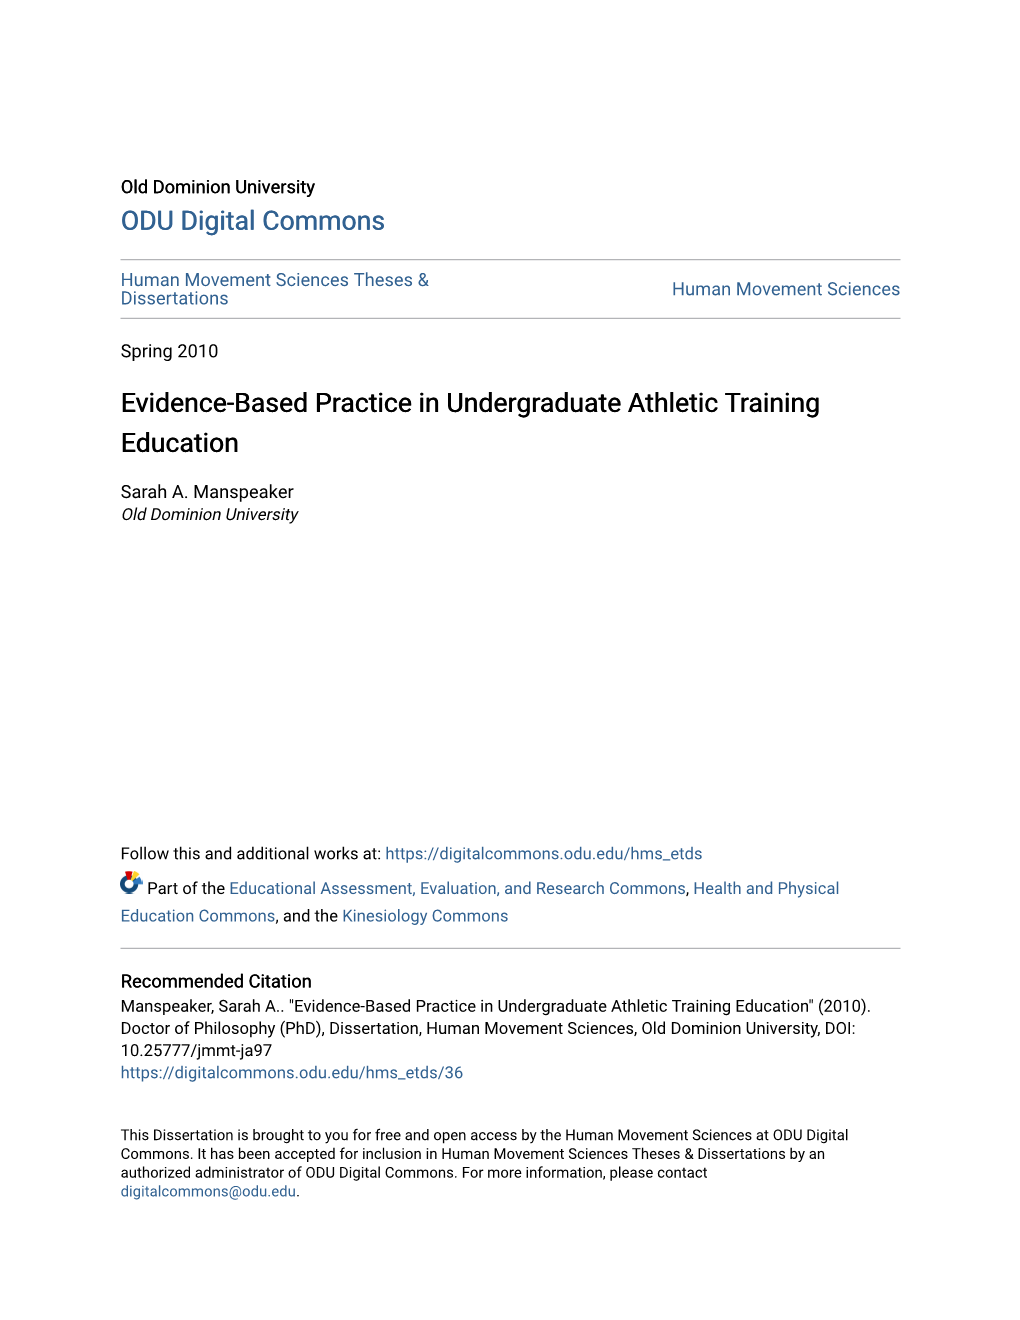 Evidence-Based Practice in Undergraduate Athletic Training Education